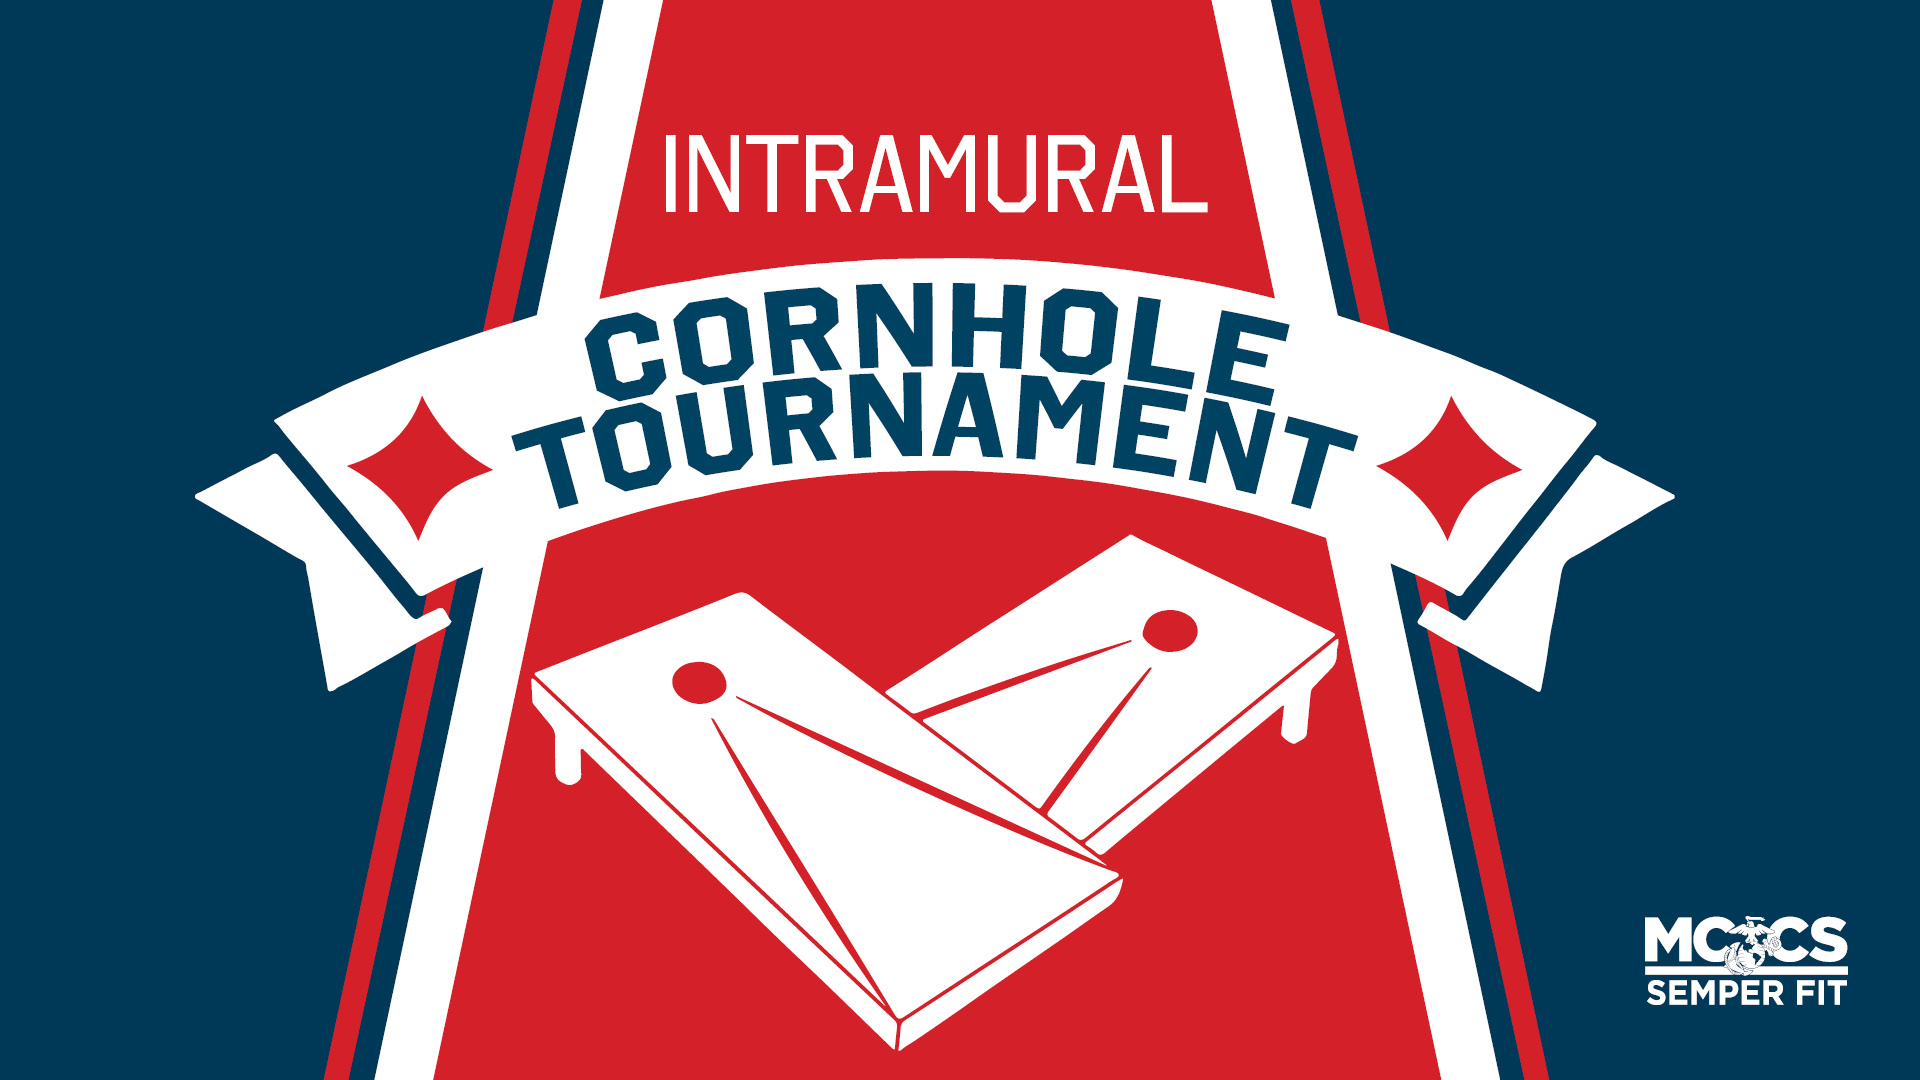 Intramural Cornhole Tournament